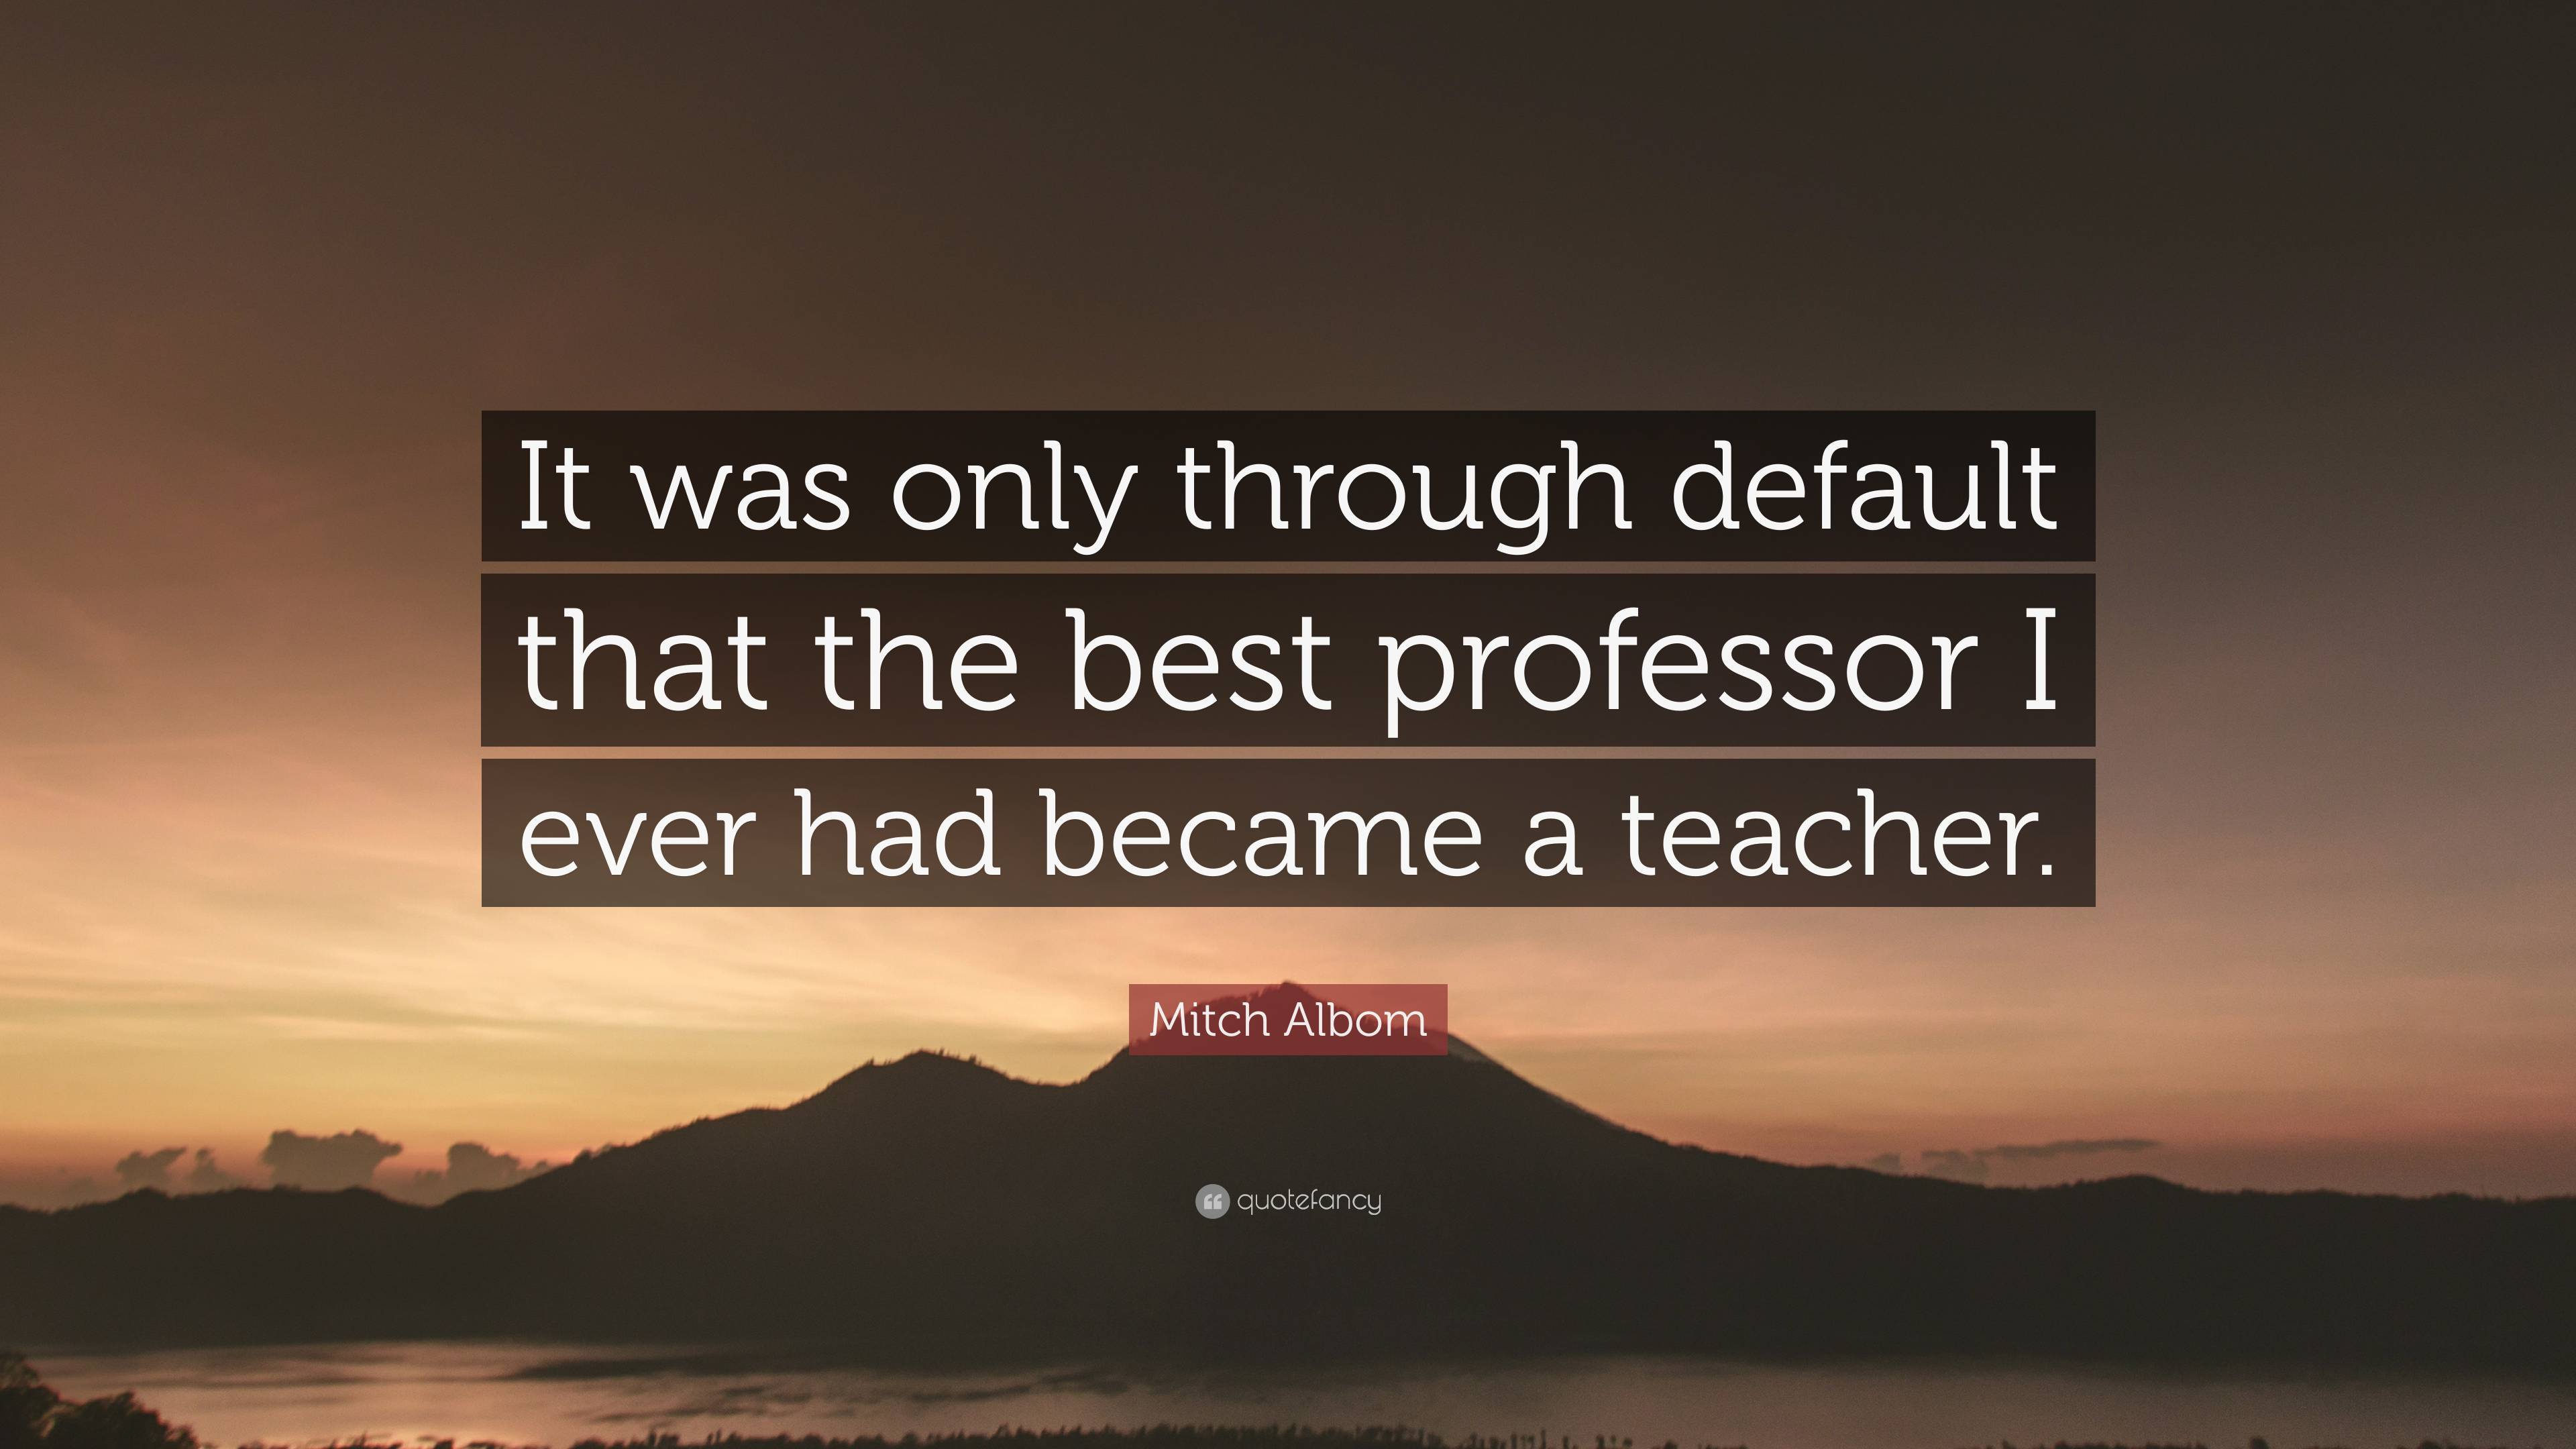 Mitch Albom Quote: “It was only through default that the best professor ...